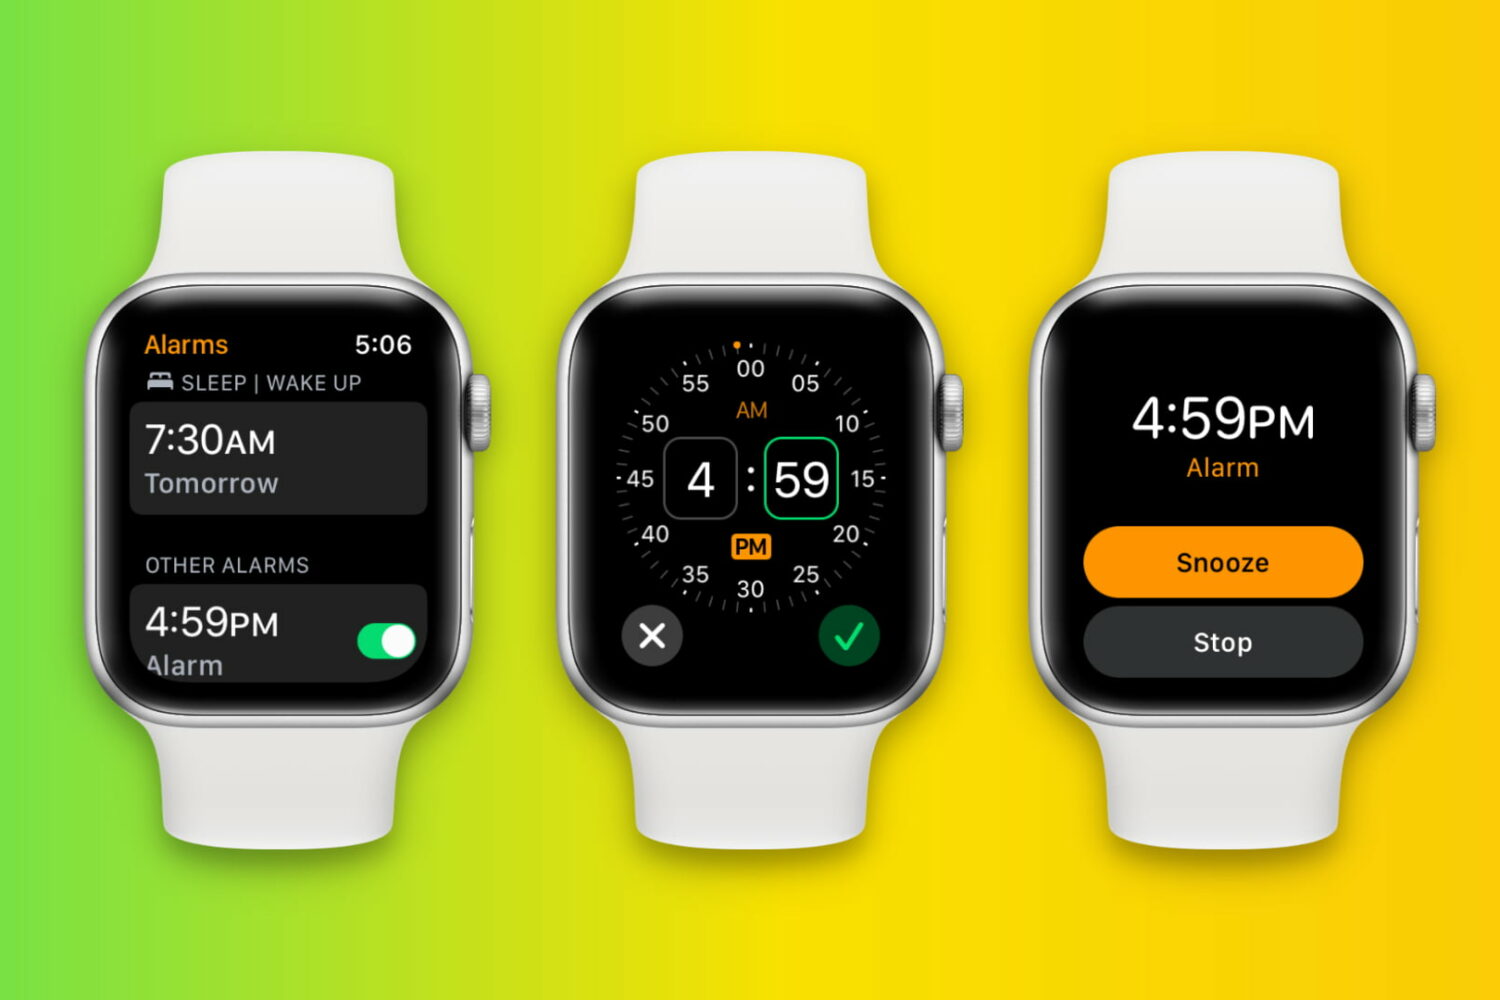 Set alarm on Apple Watch